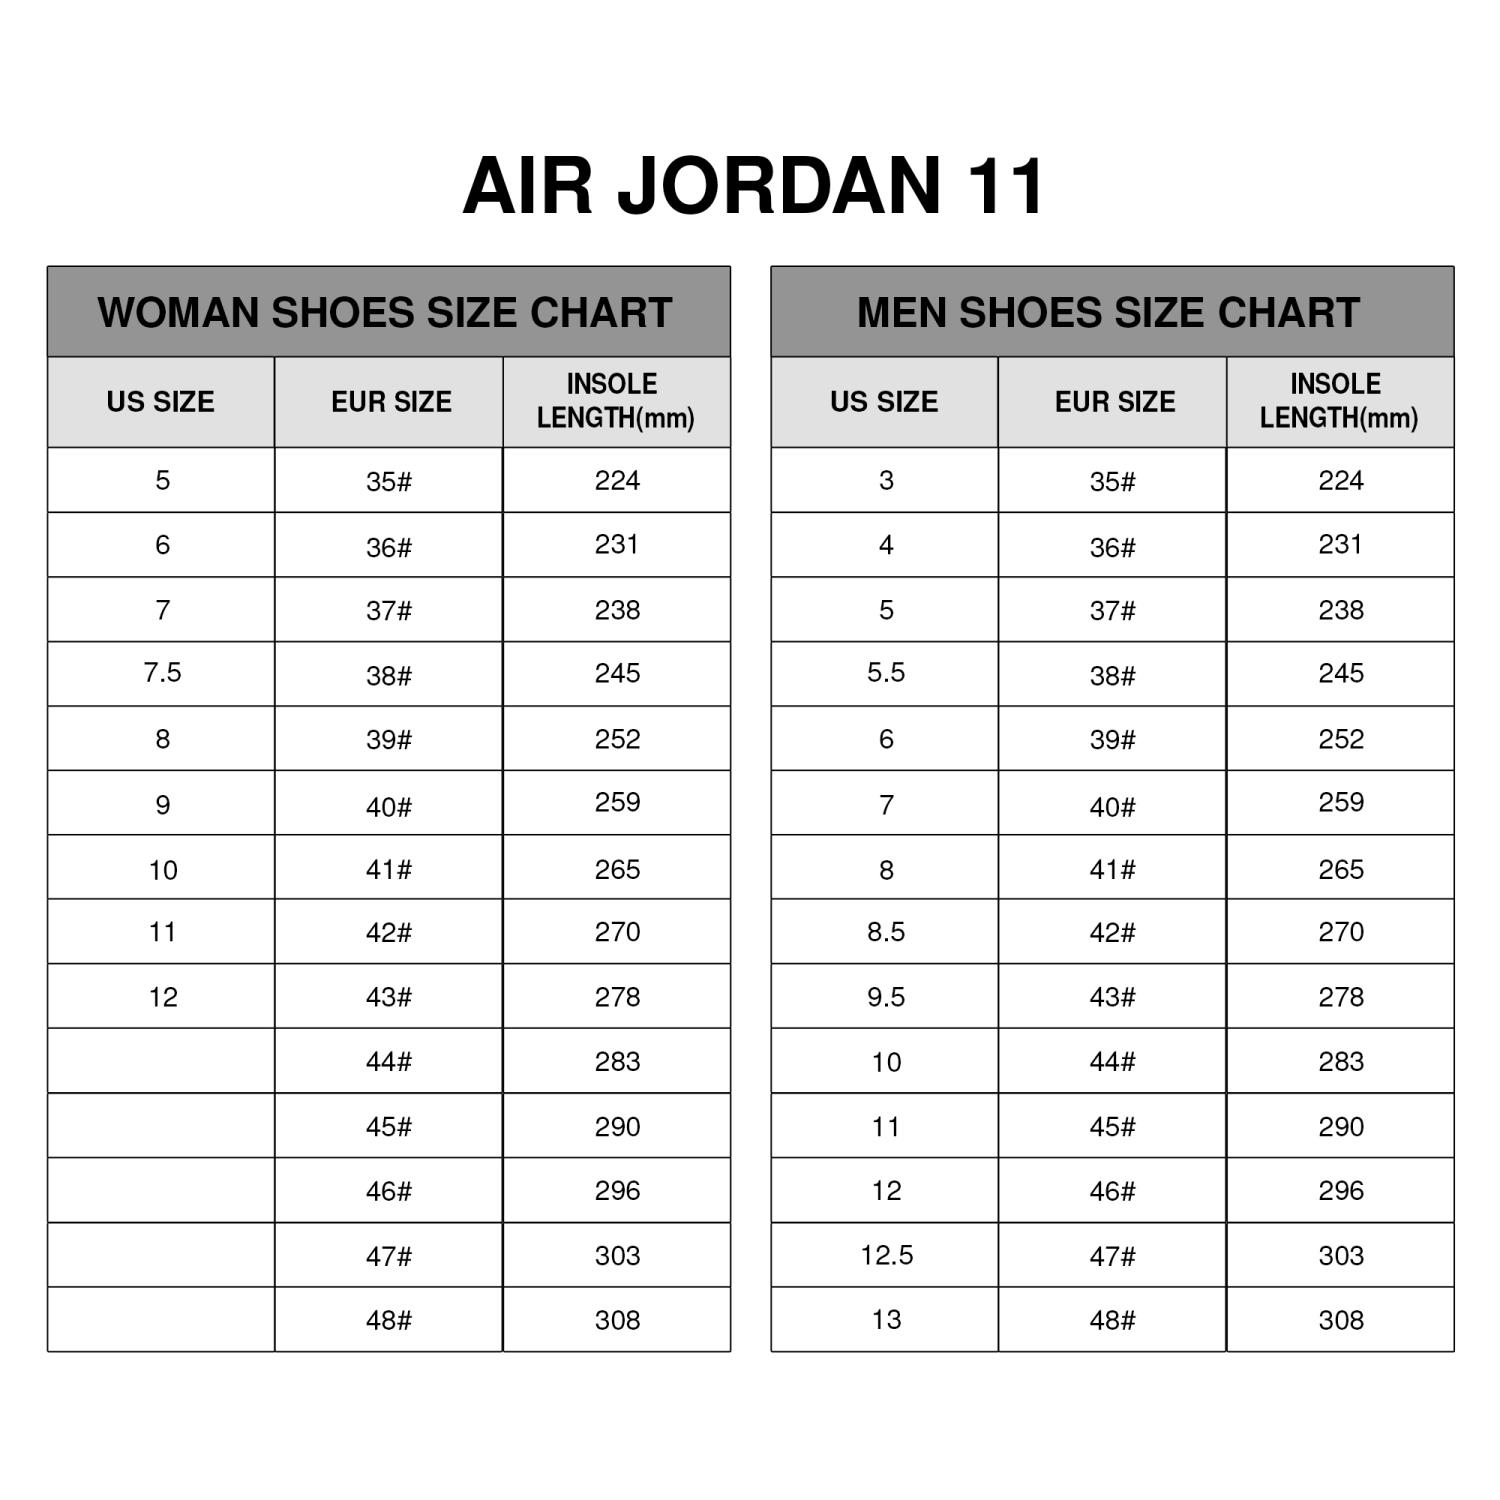 Oakland Raiders Air Jordan 11 Shoes